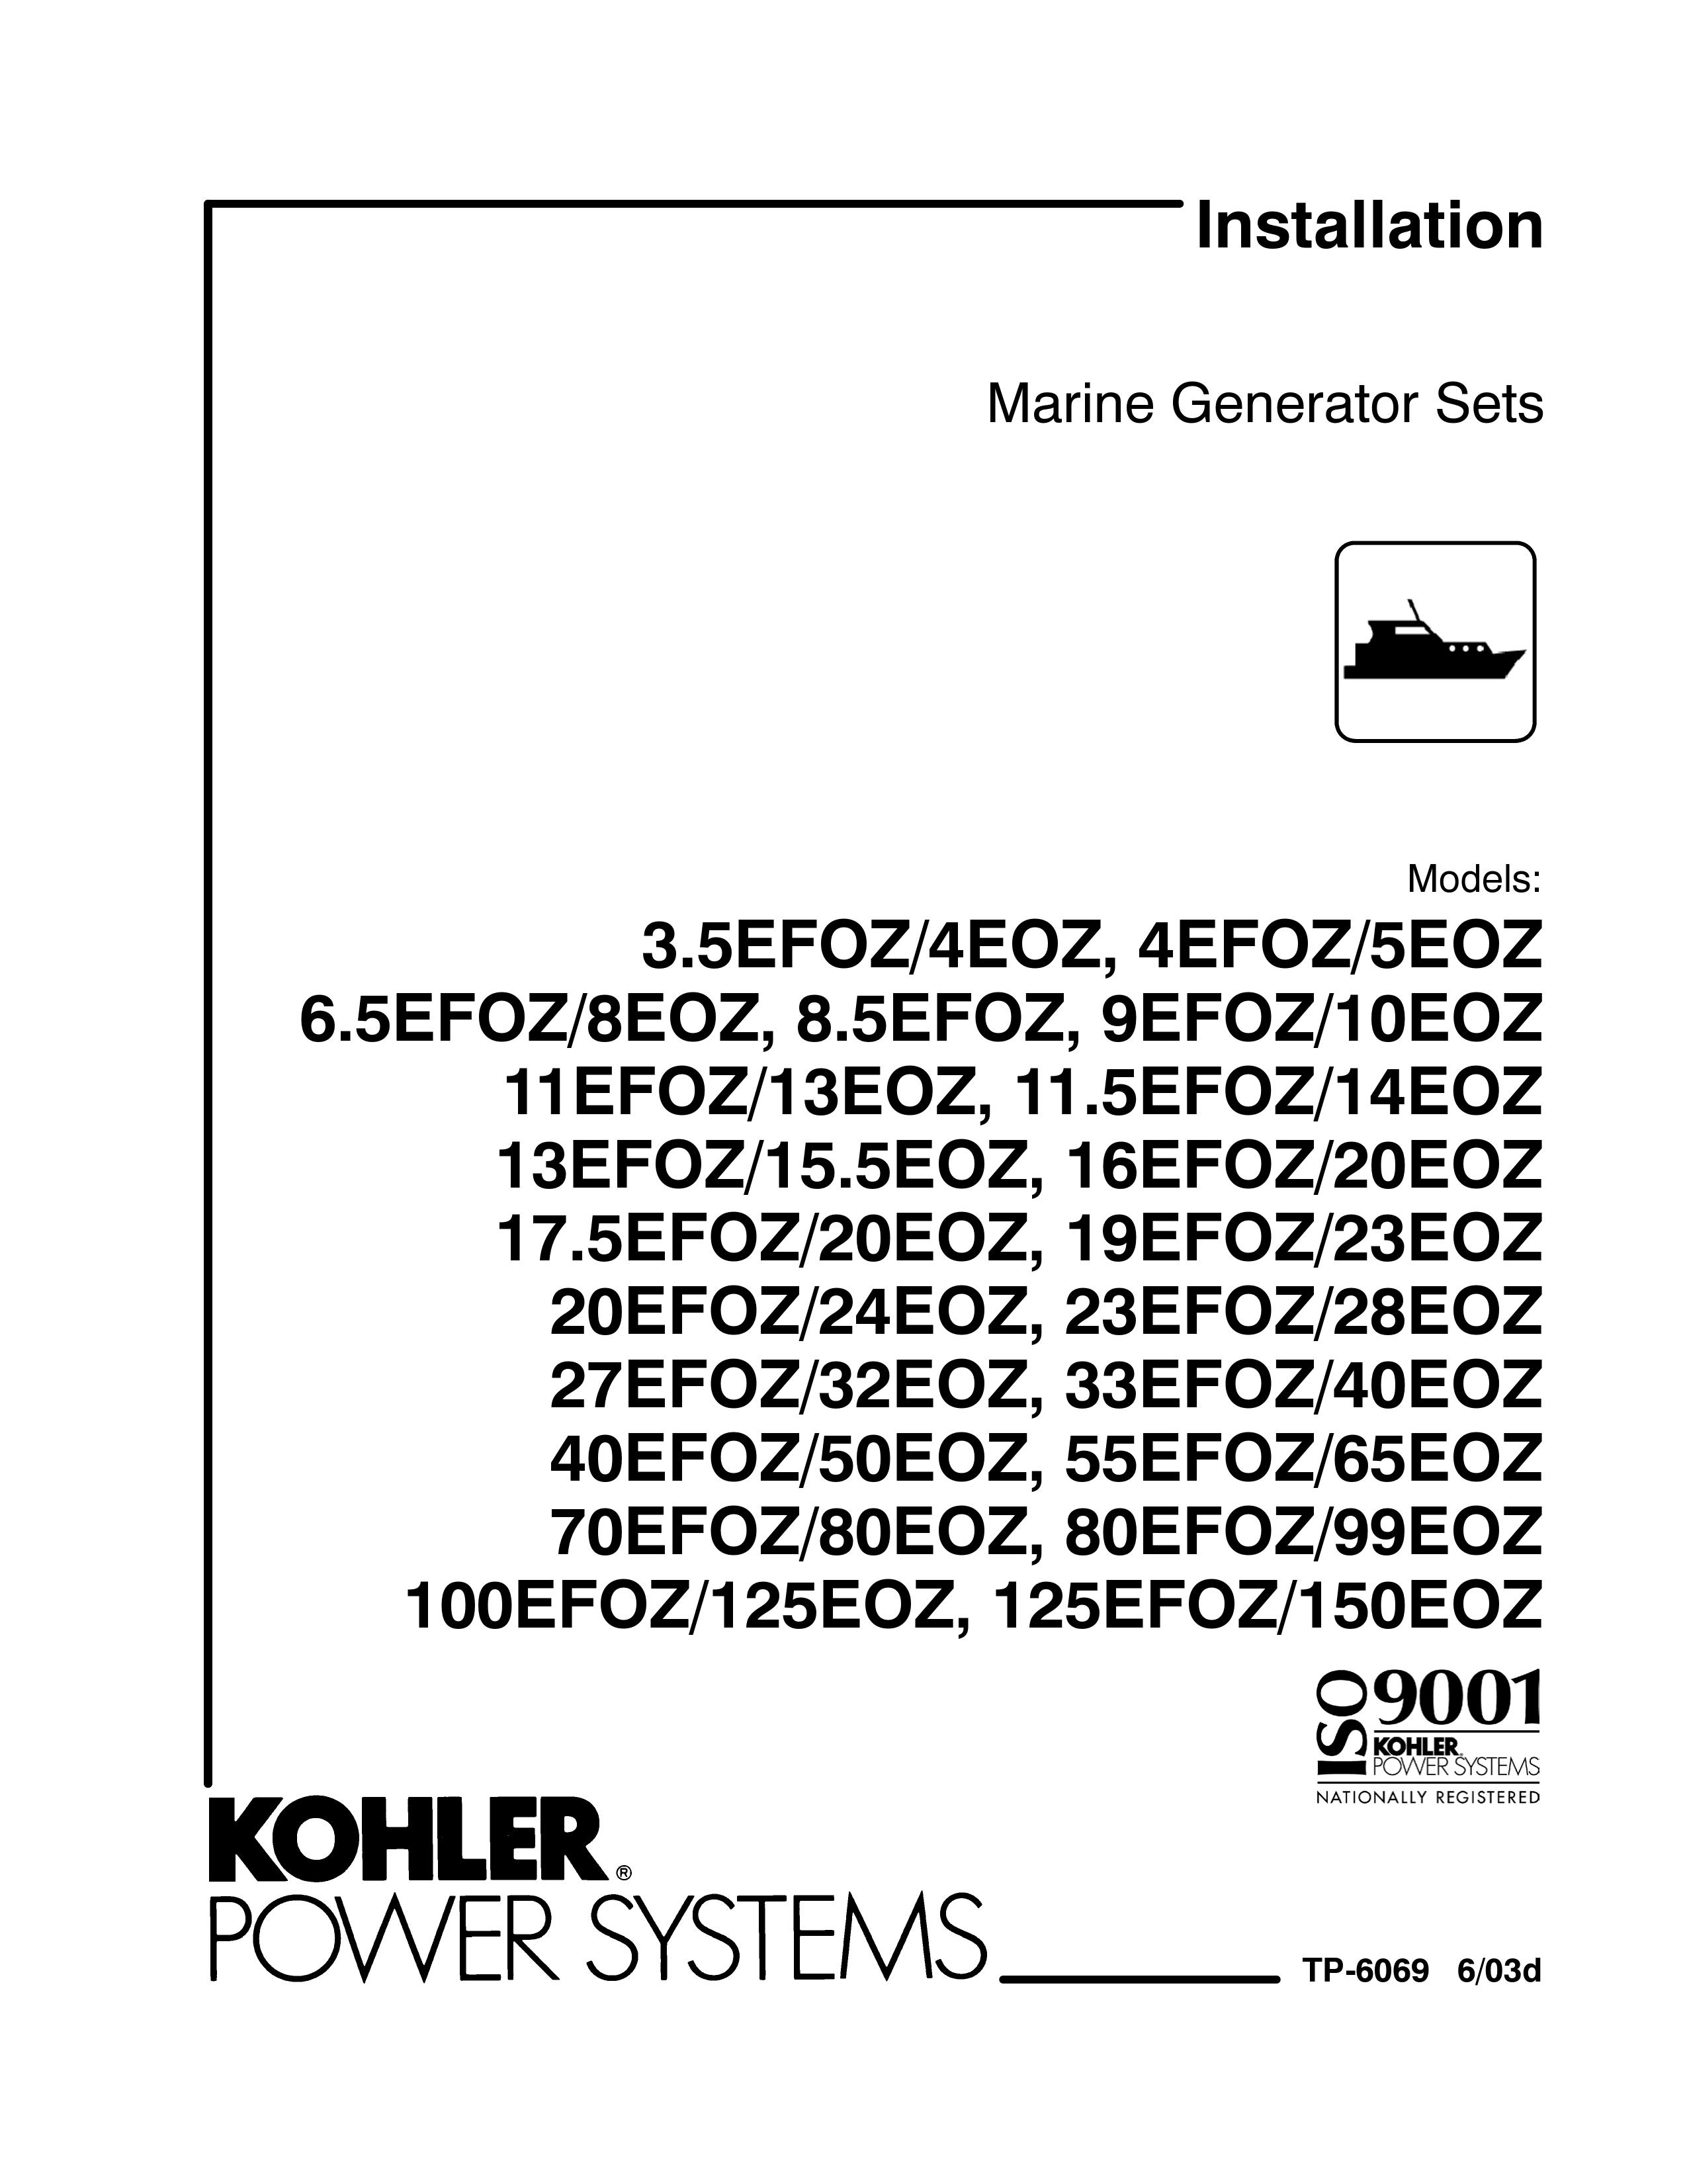 Kohler 100EFOZ/125EOZ Portable Generator User Manual